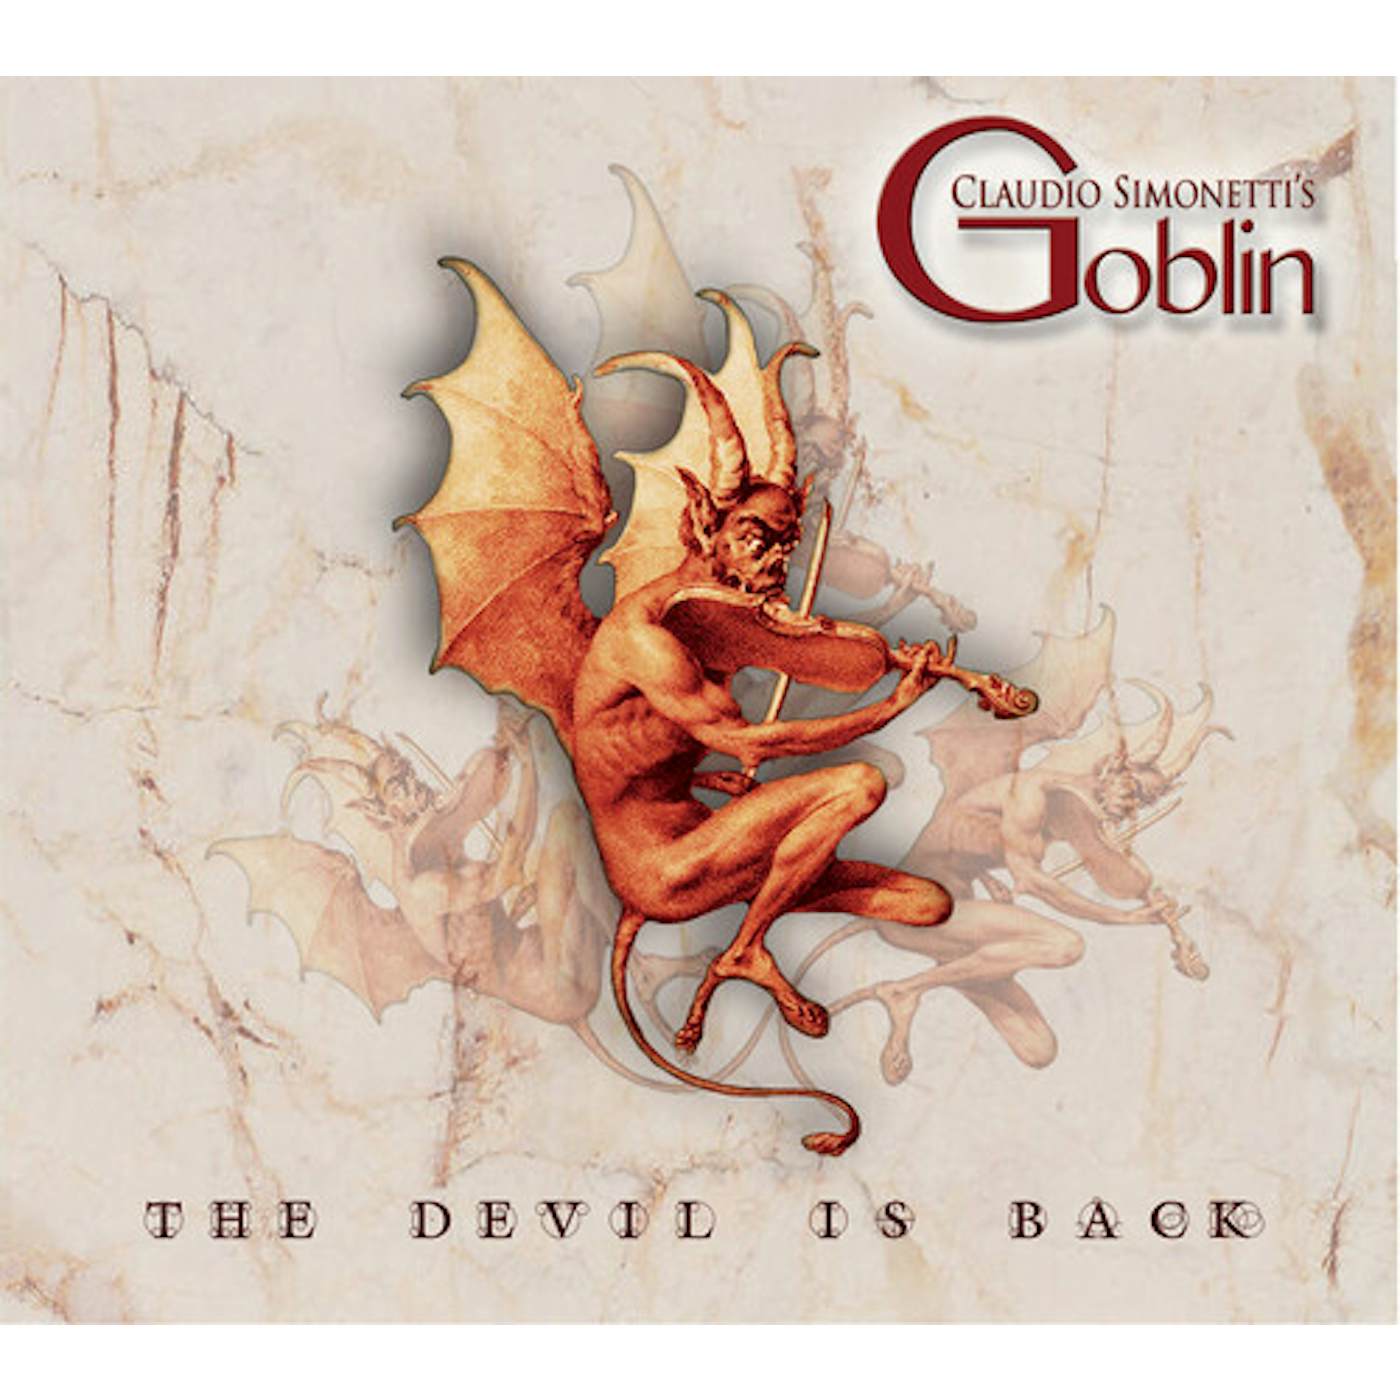 Claudio Simonetti's Goblin DEVIL IS BACK Vinyl Record